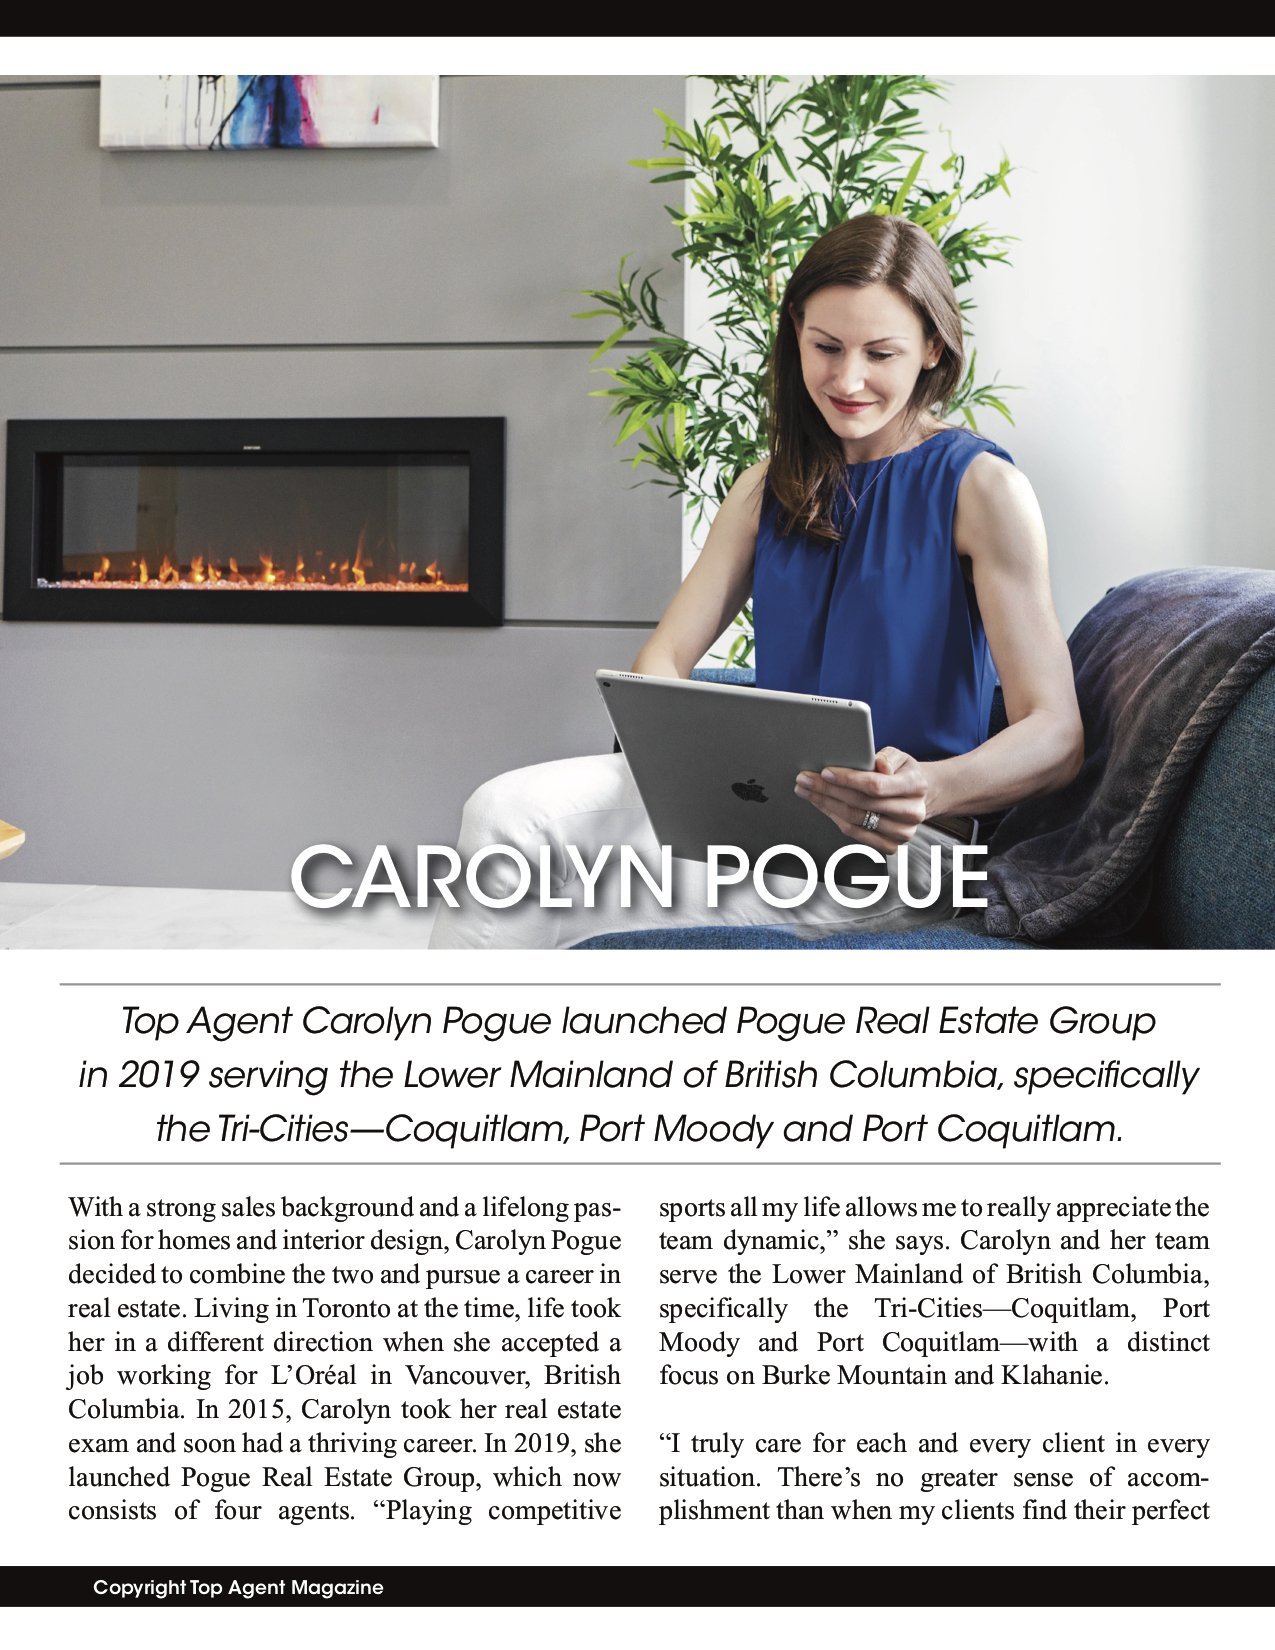 Top-Agent-Magazine-Canada-Carolyn-Pogue-Top-Coquitlam-Realtor-2.jpg